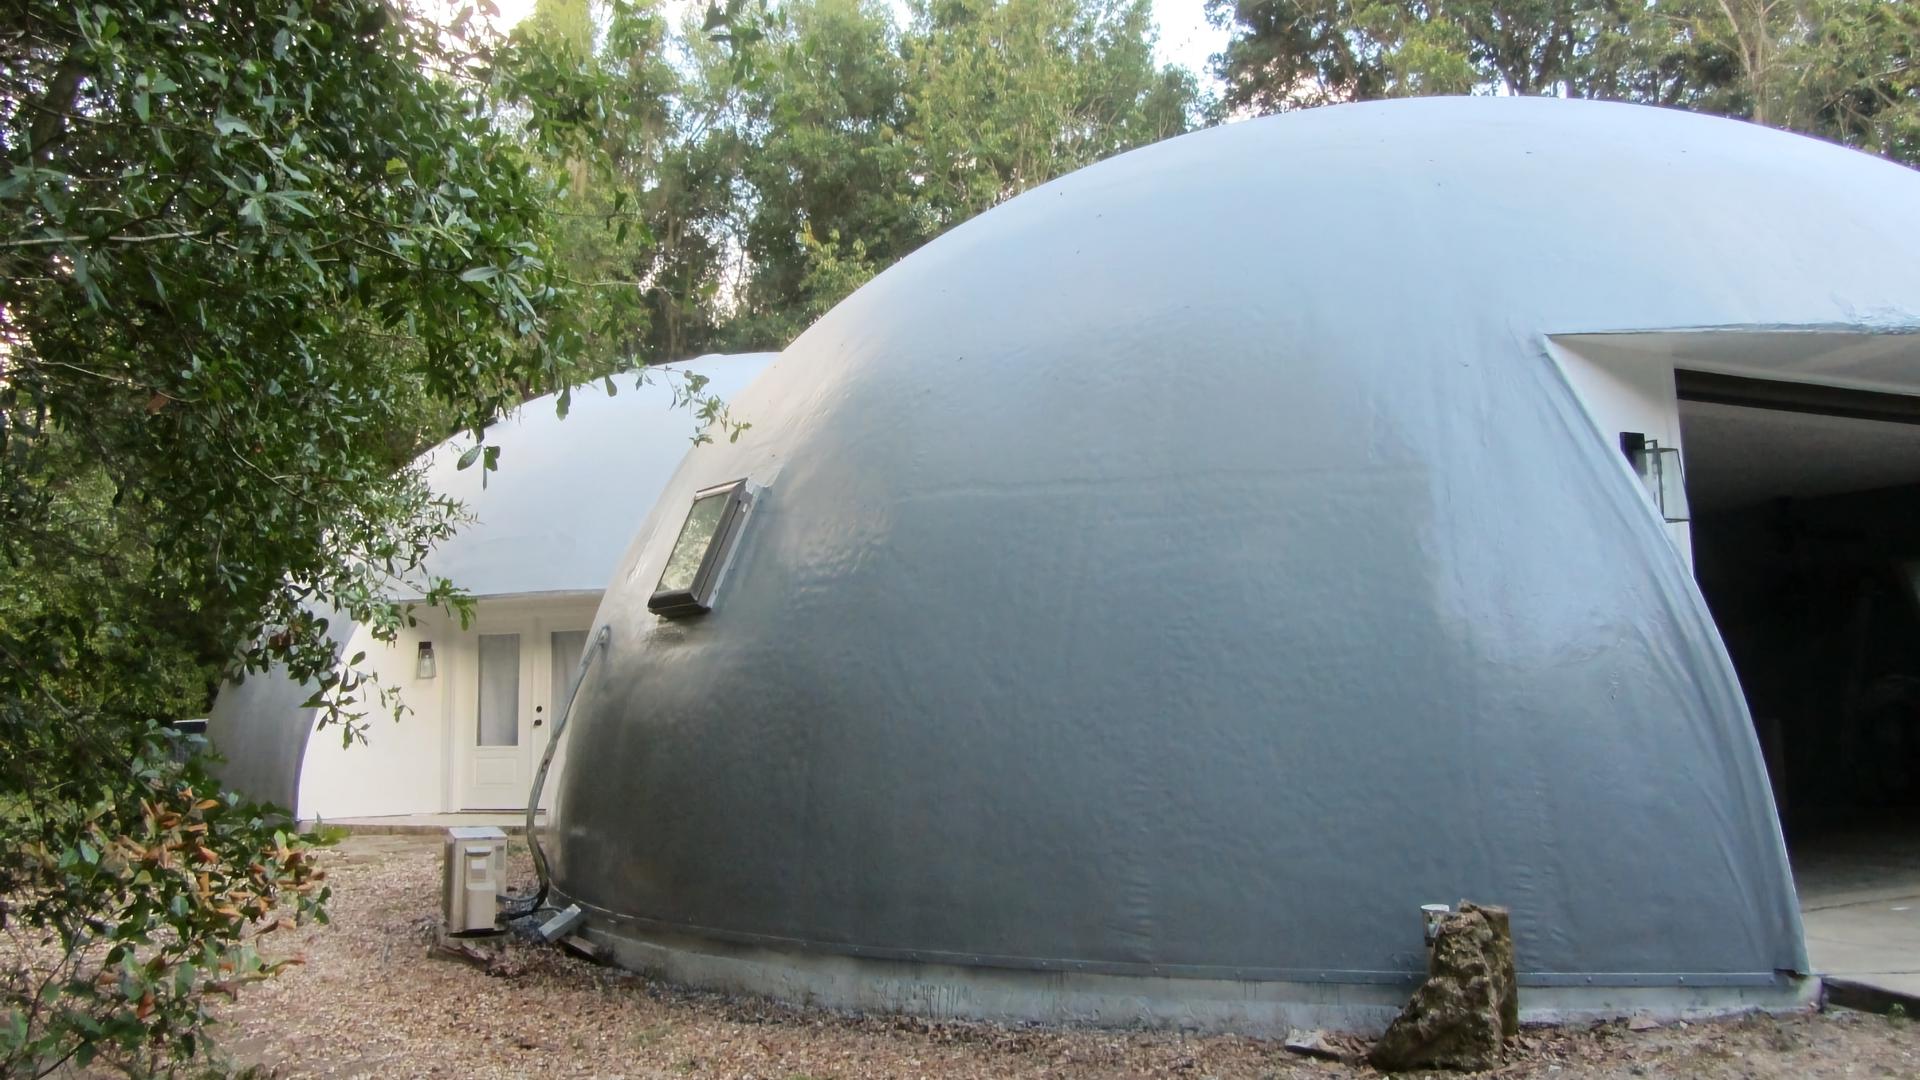 Twin dome home in Ocala, Florida.